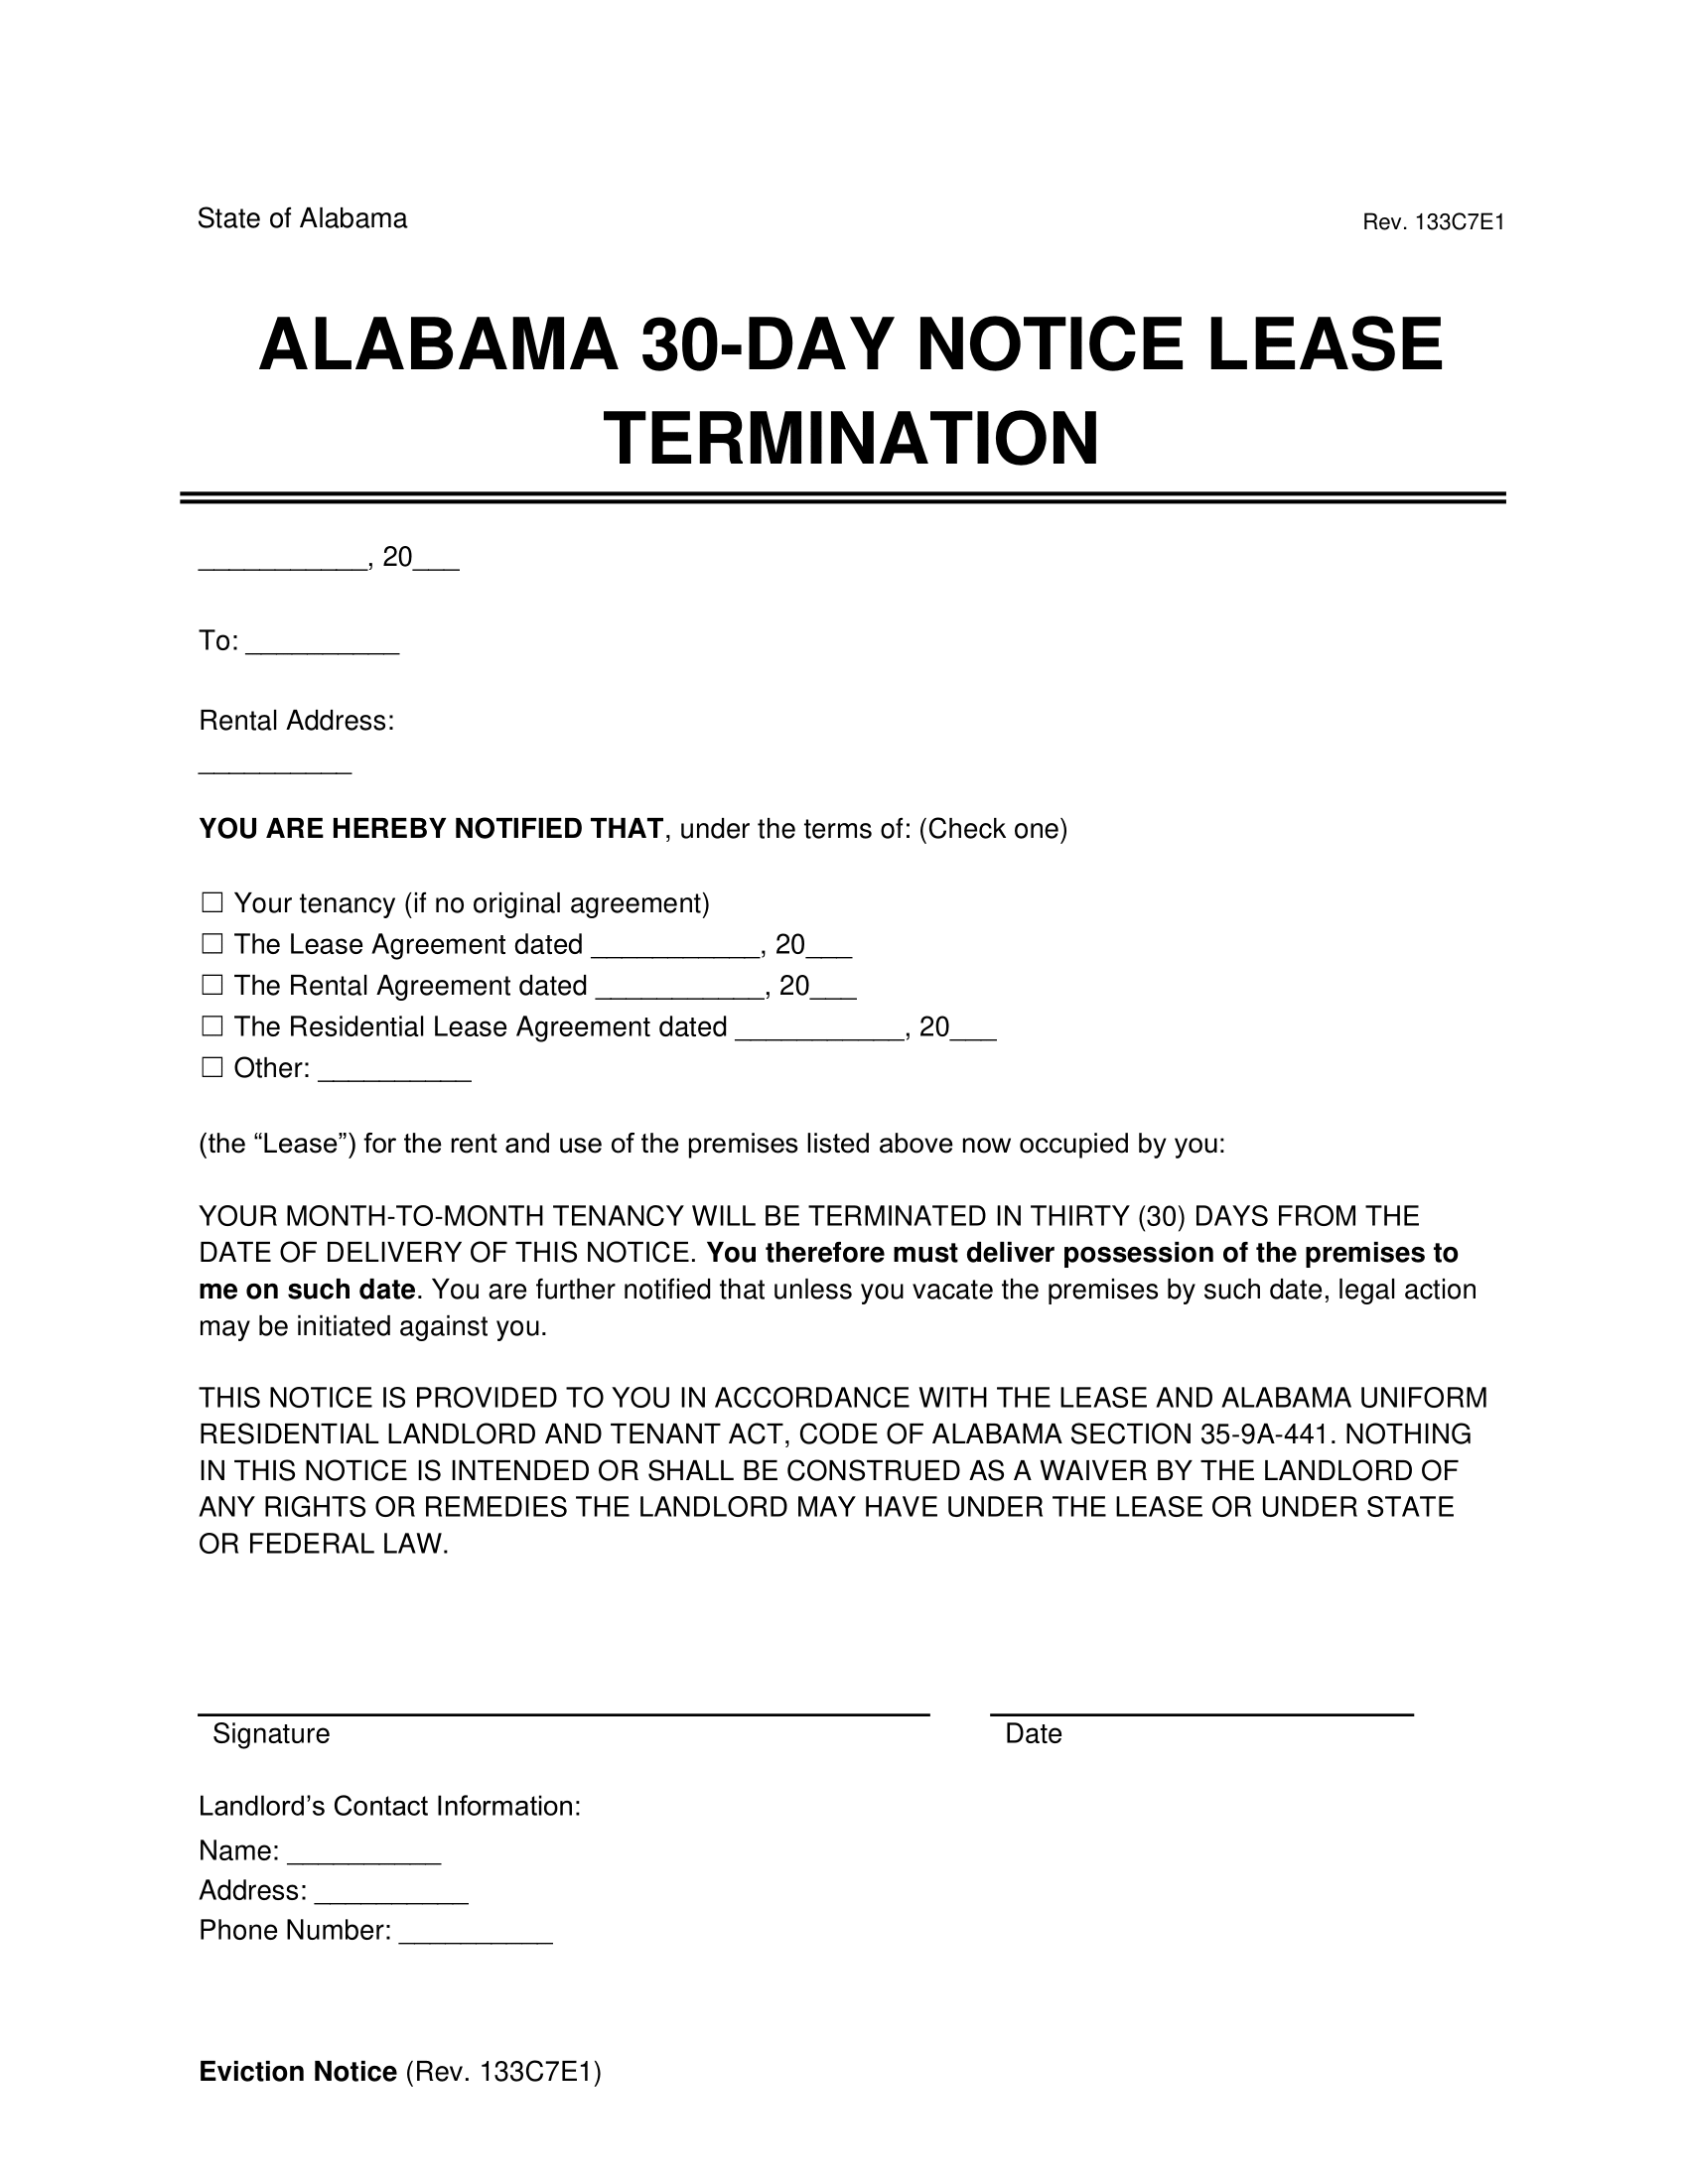 Alabama 30-Day Notice Lease Termination